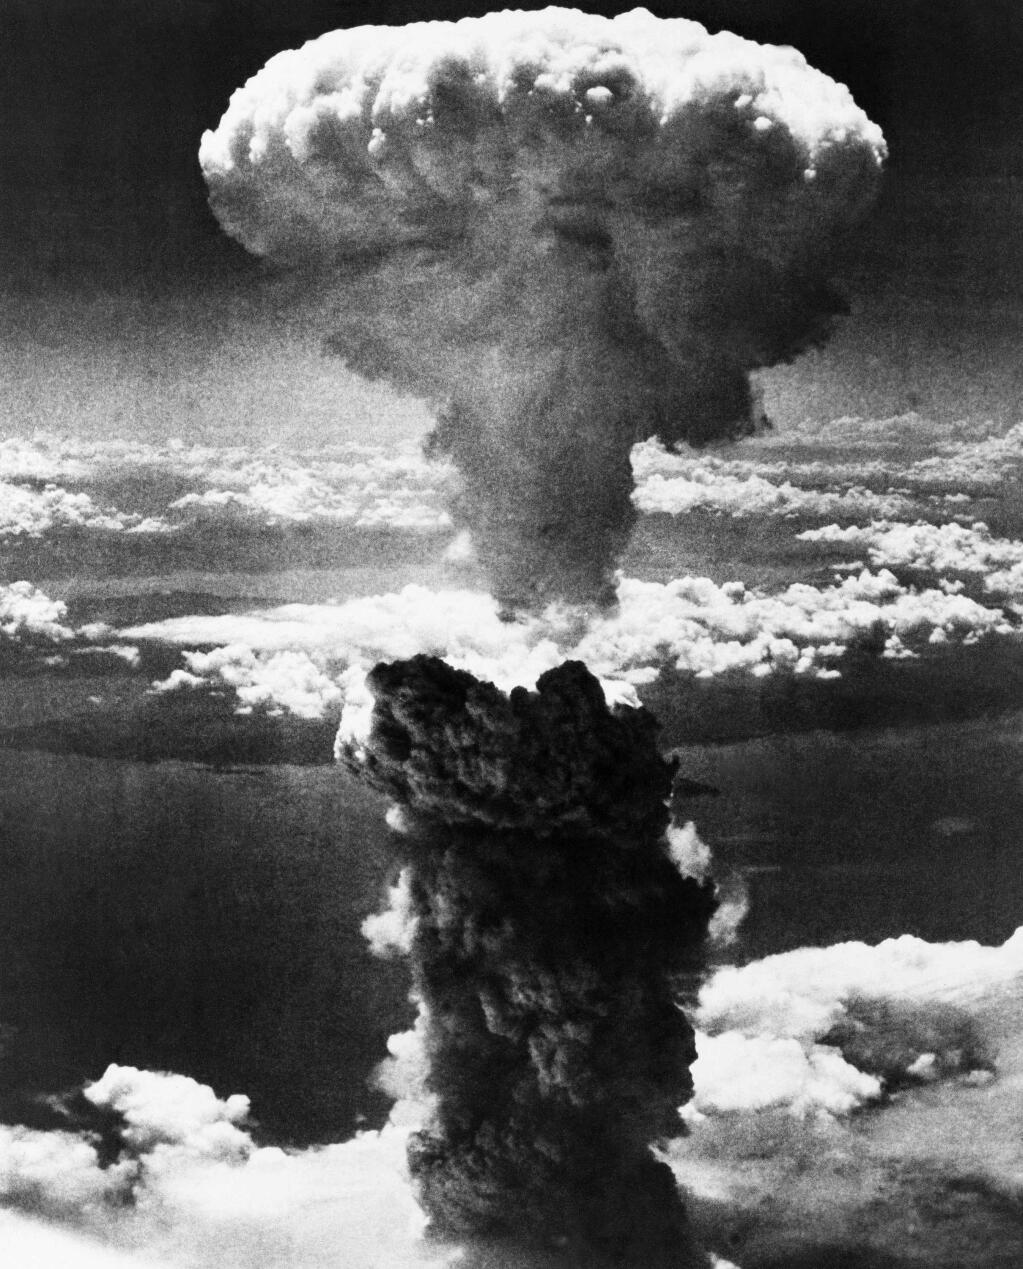 A mushroom cloud rises after an atomic bomb exploded above Nagasaki, Japan. (Associated Press, 1945)